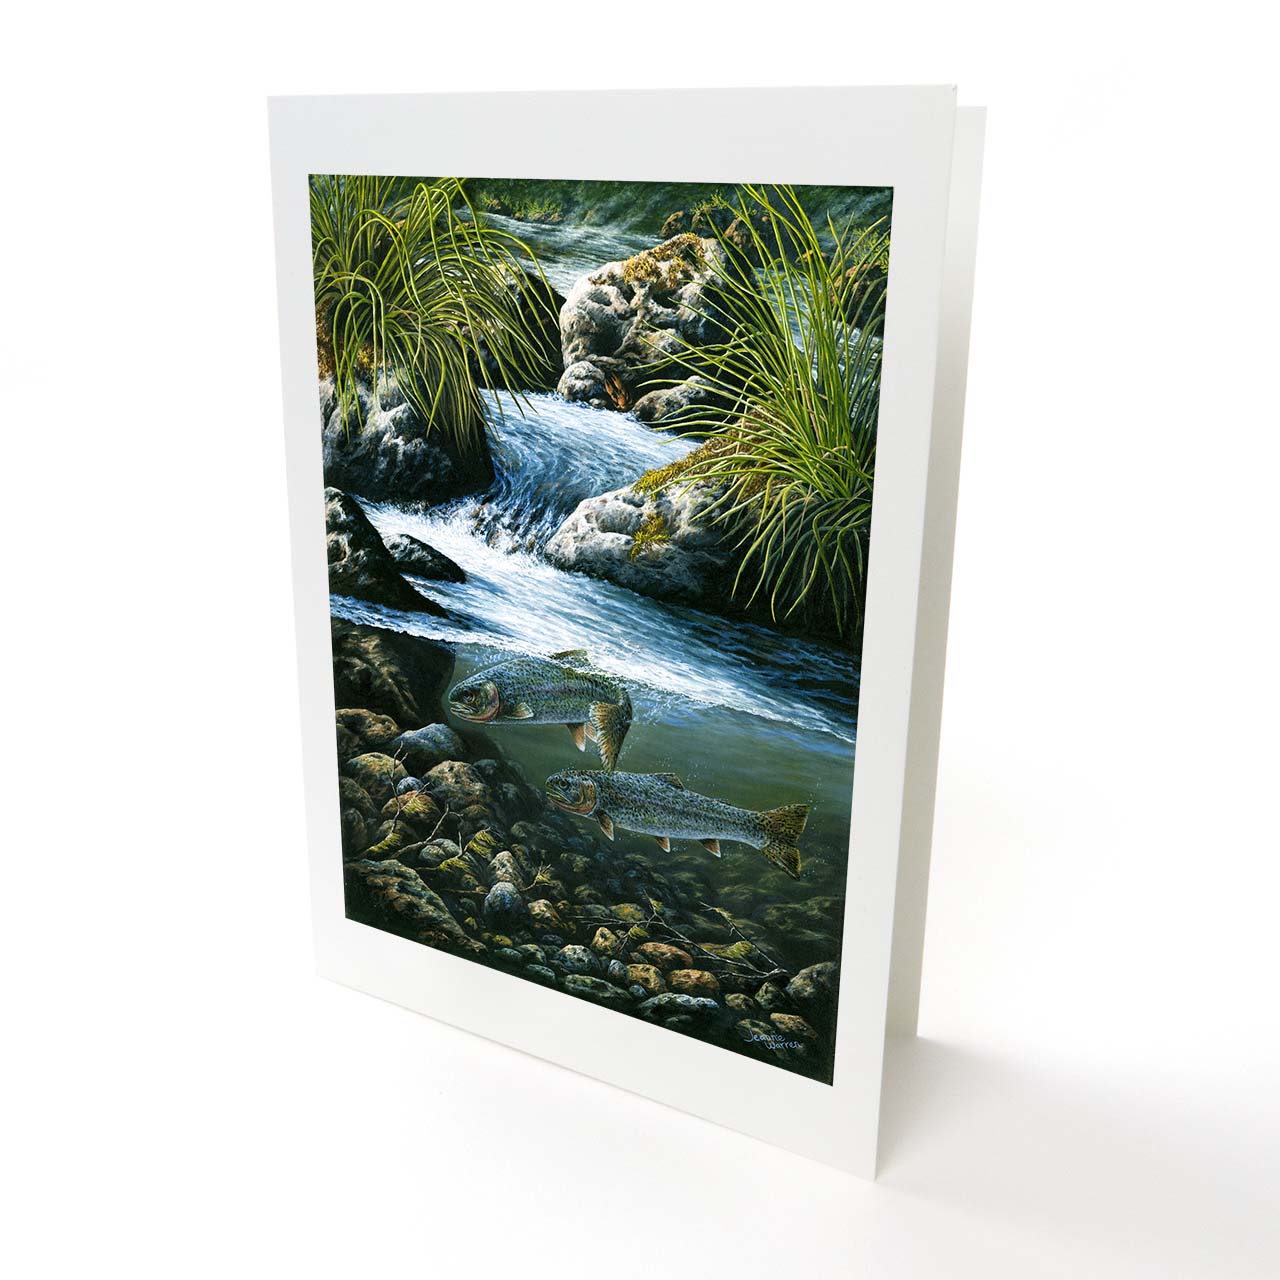 Sea-Run Cutthroat Trout Art Greeting Card - "River Run"